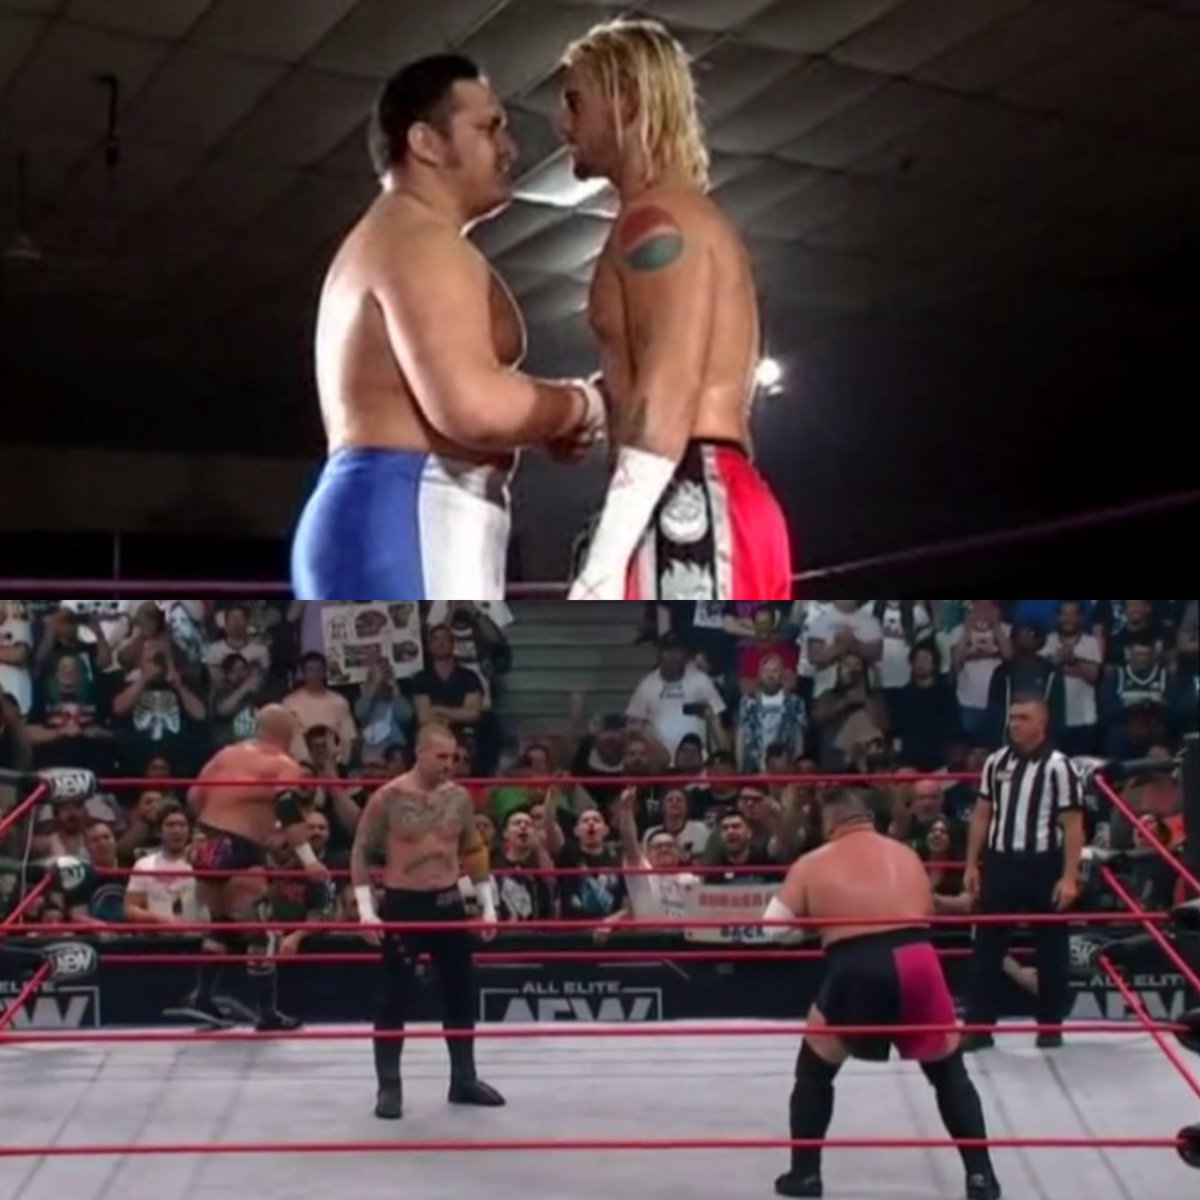 2004 ➡️ 2023

Samoa Joe & CM Punk meet again in the ring after 19 years.